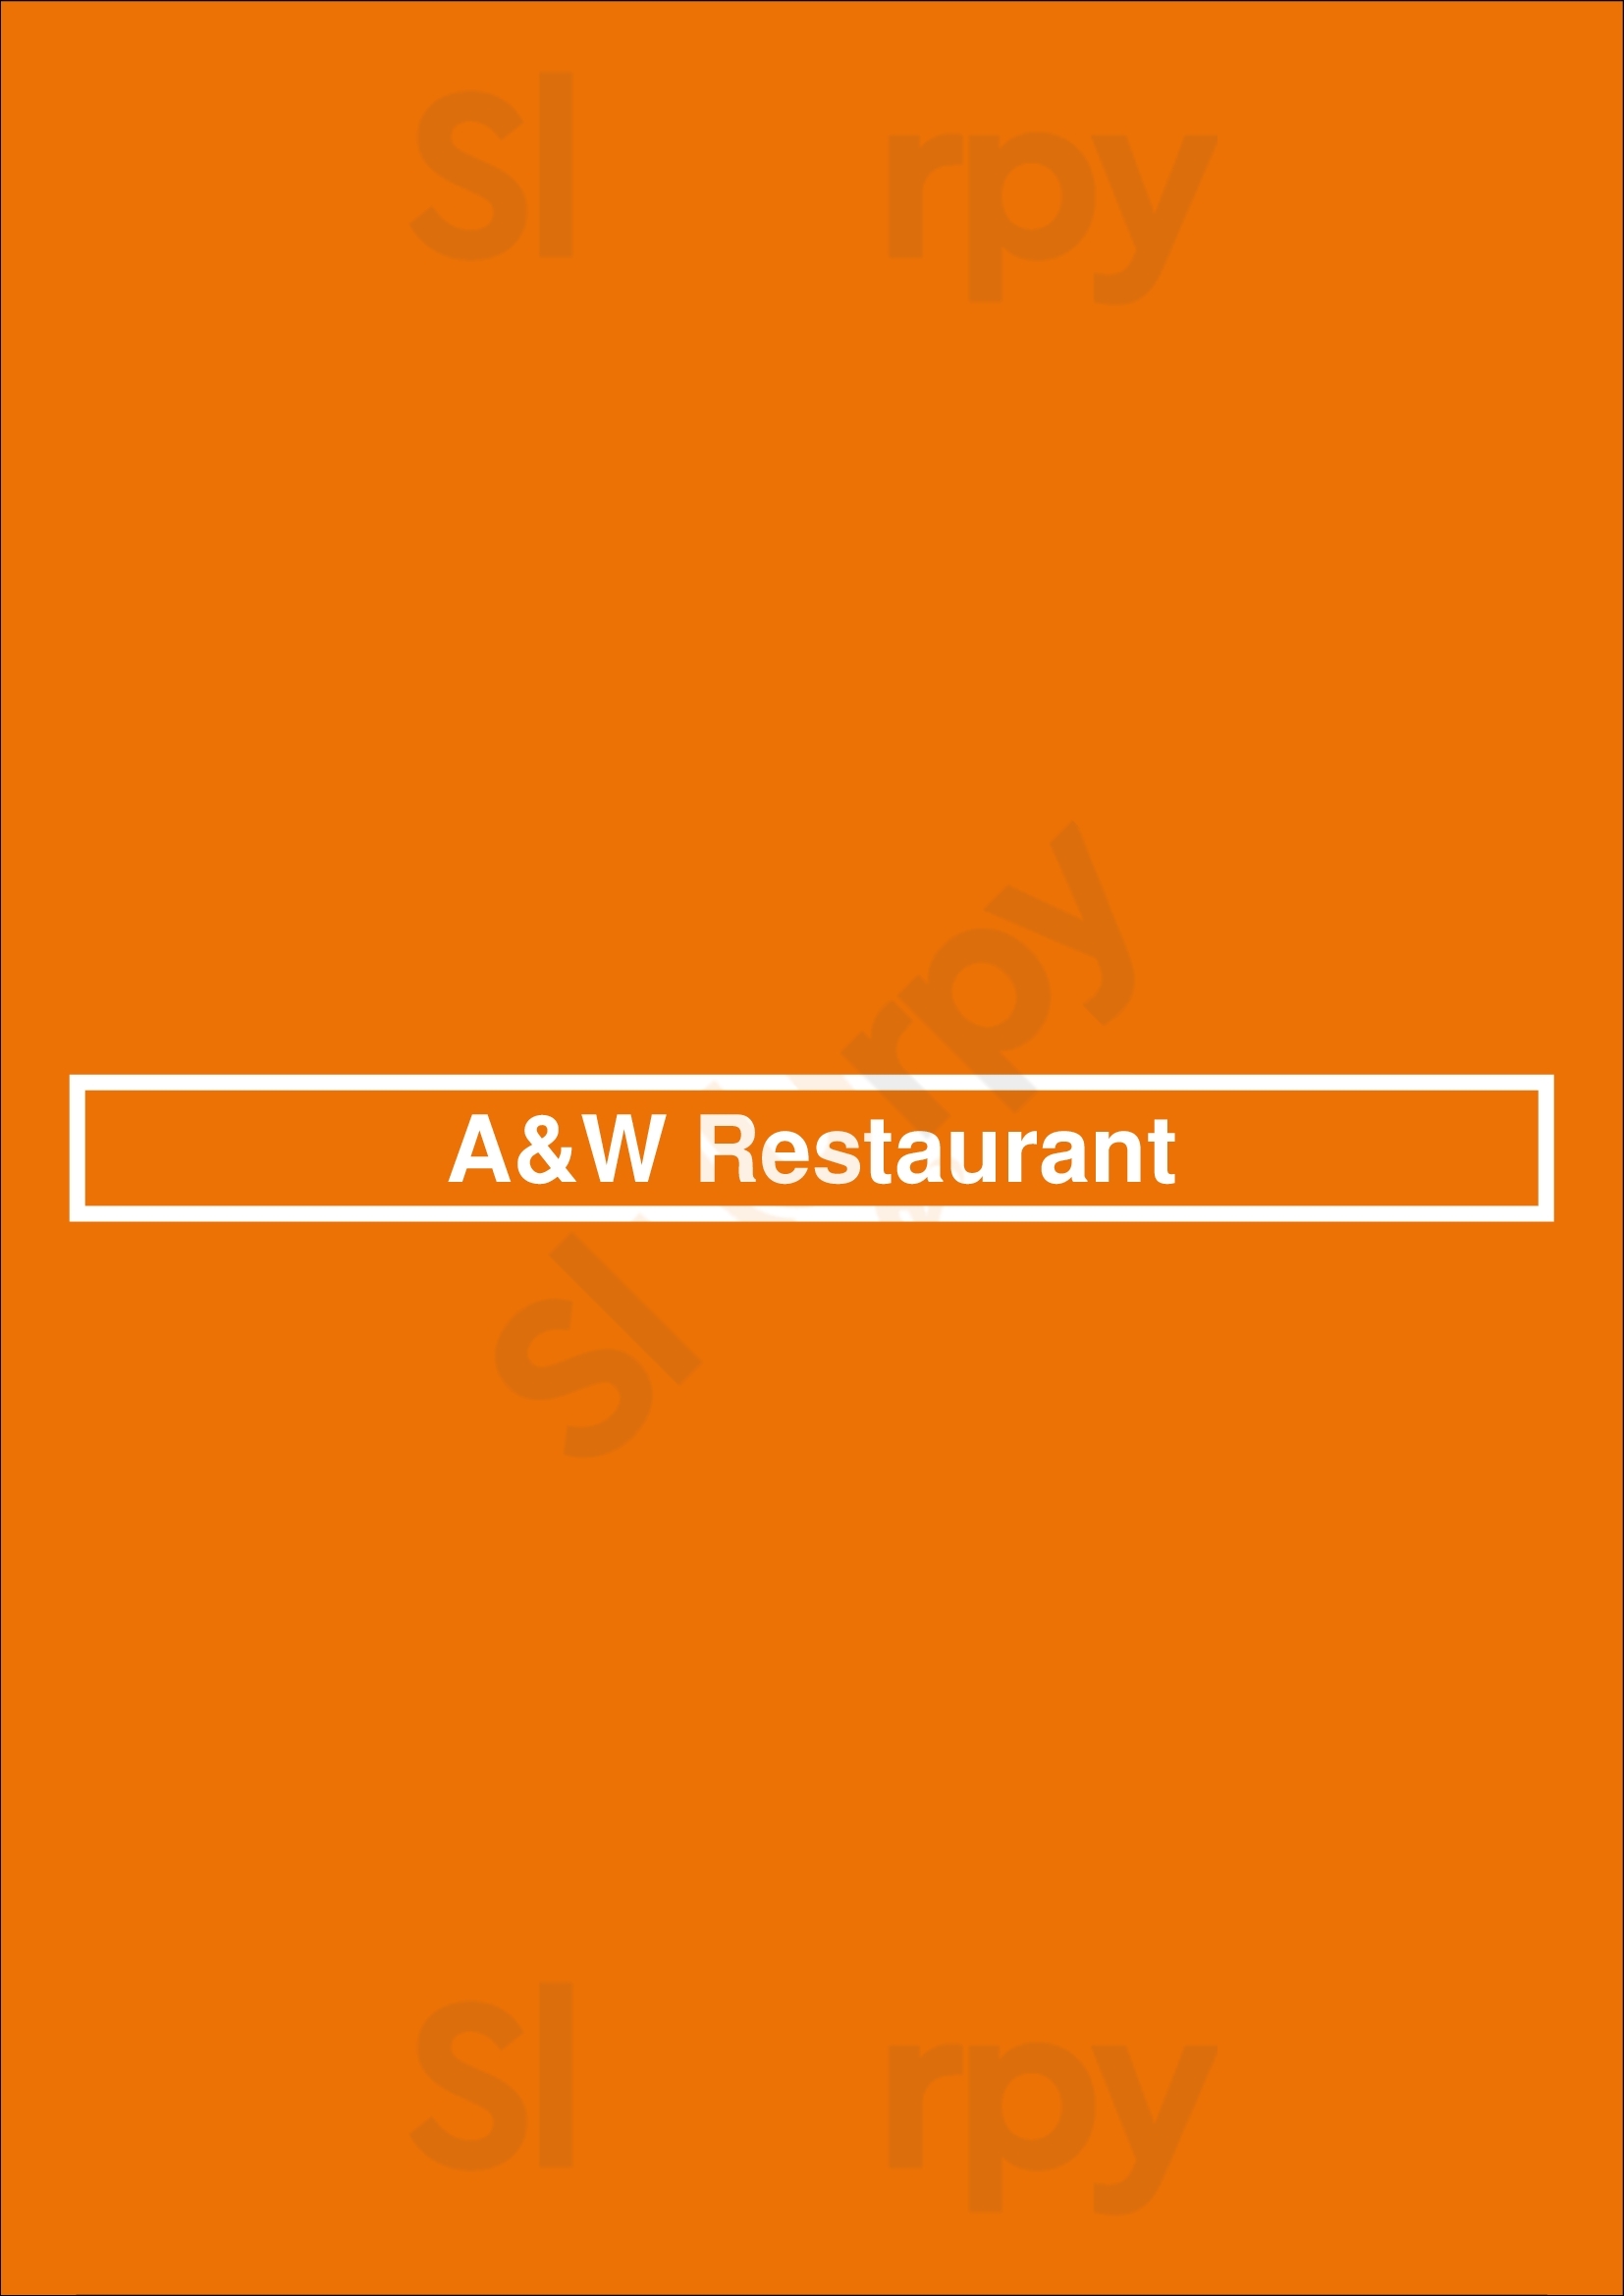 A&w Restaurant Winnipeg Menu - 1